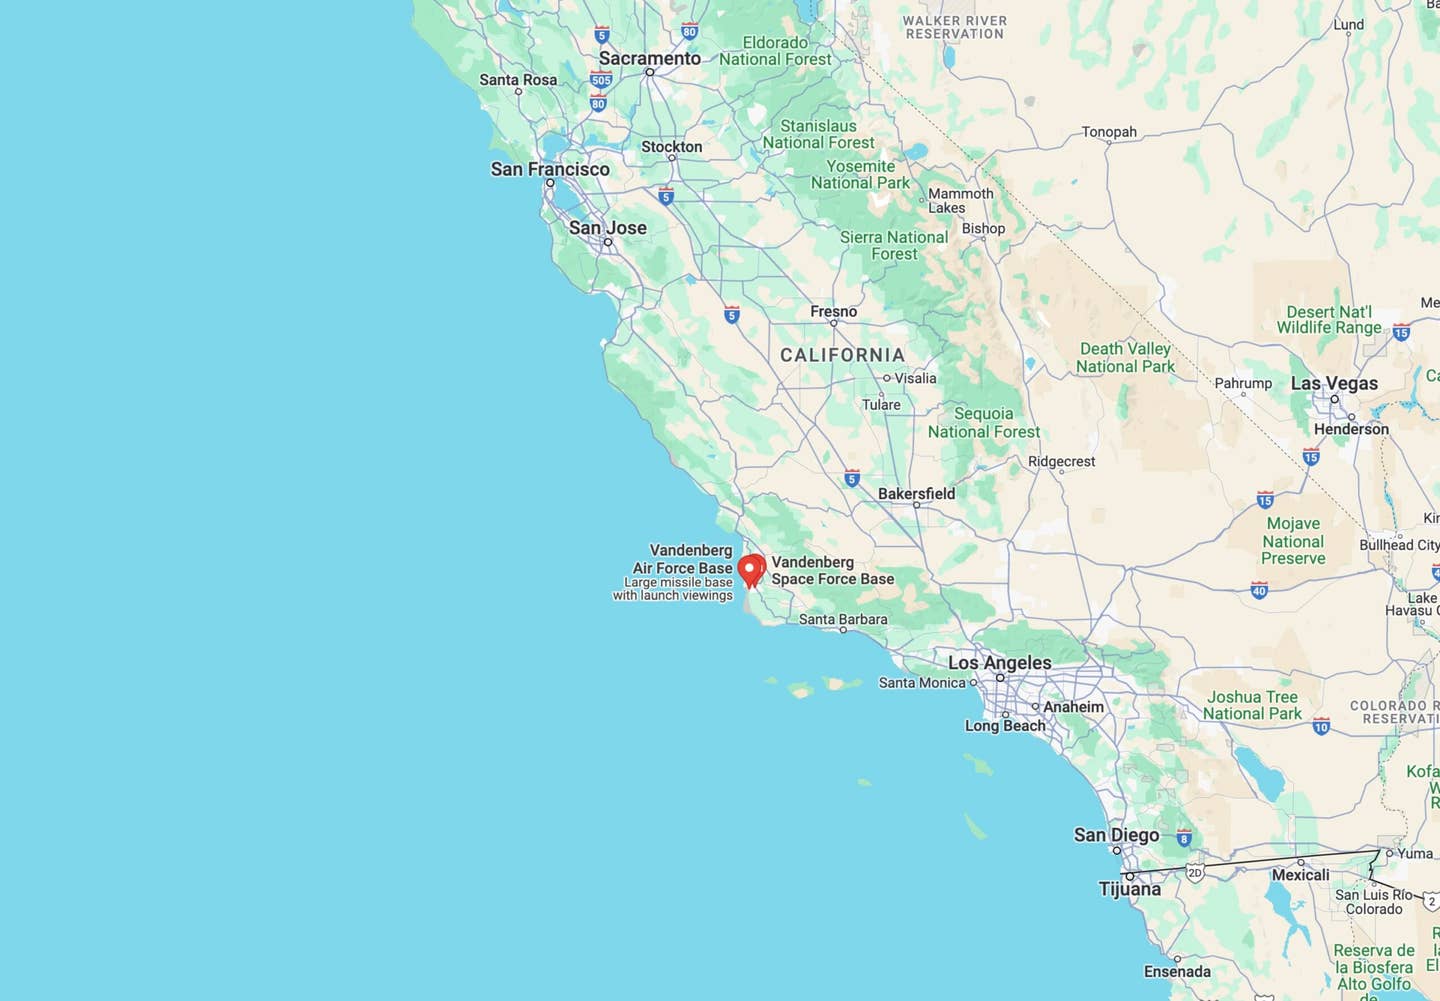 Vandenberg Space Force Base seen in relation to other portions of California. <em>Google Maps</em>